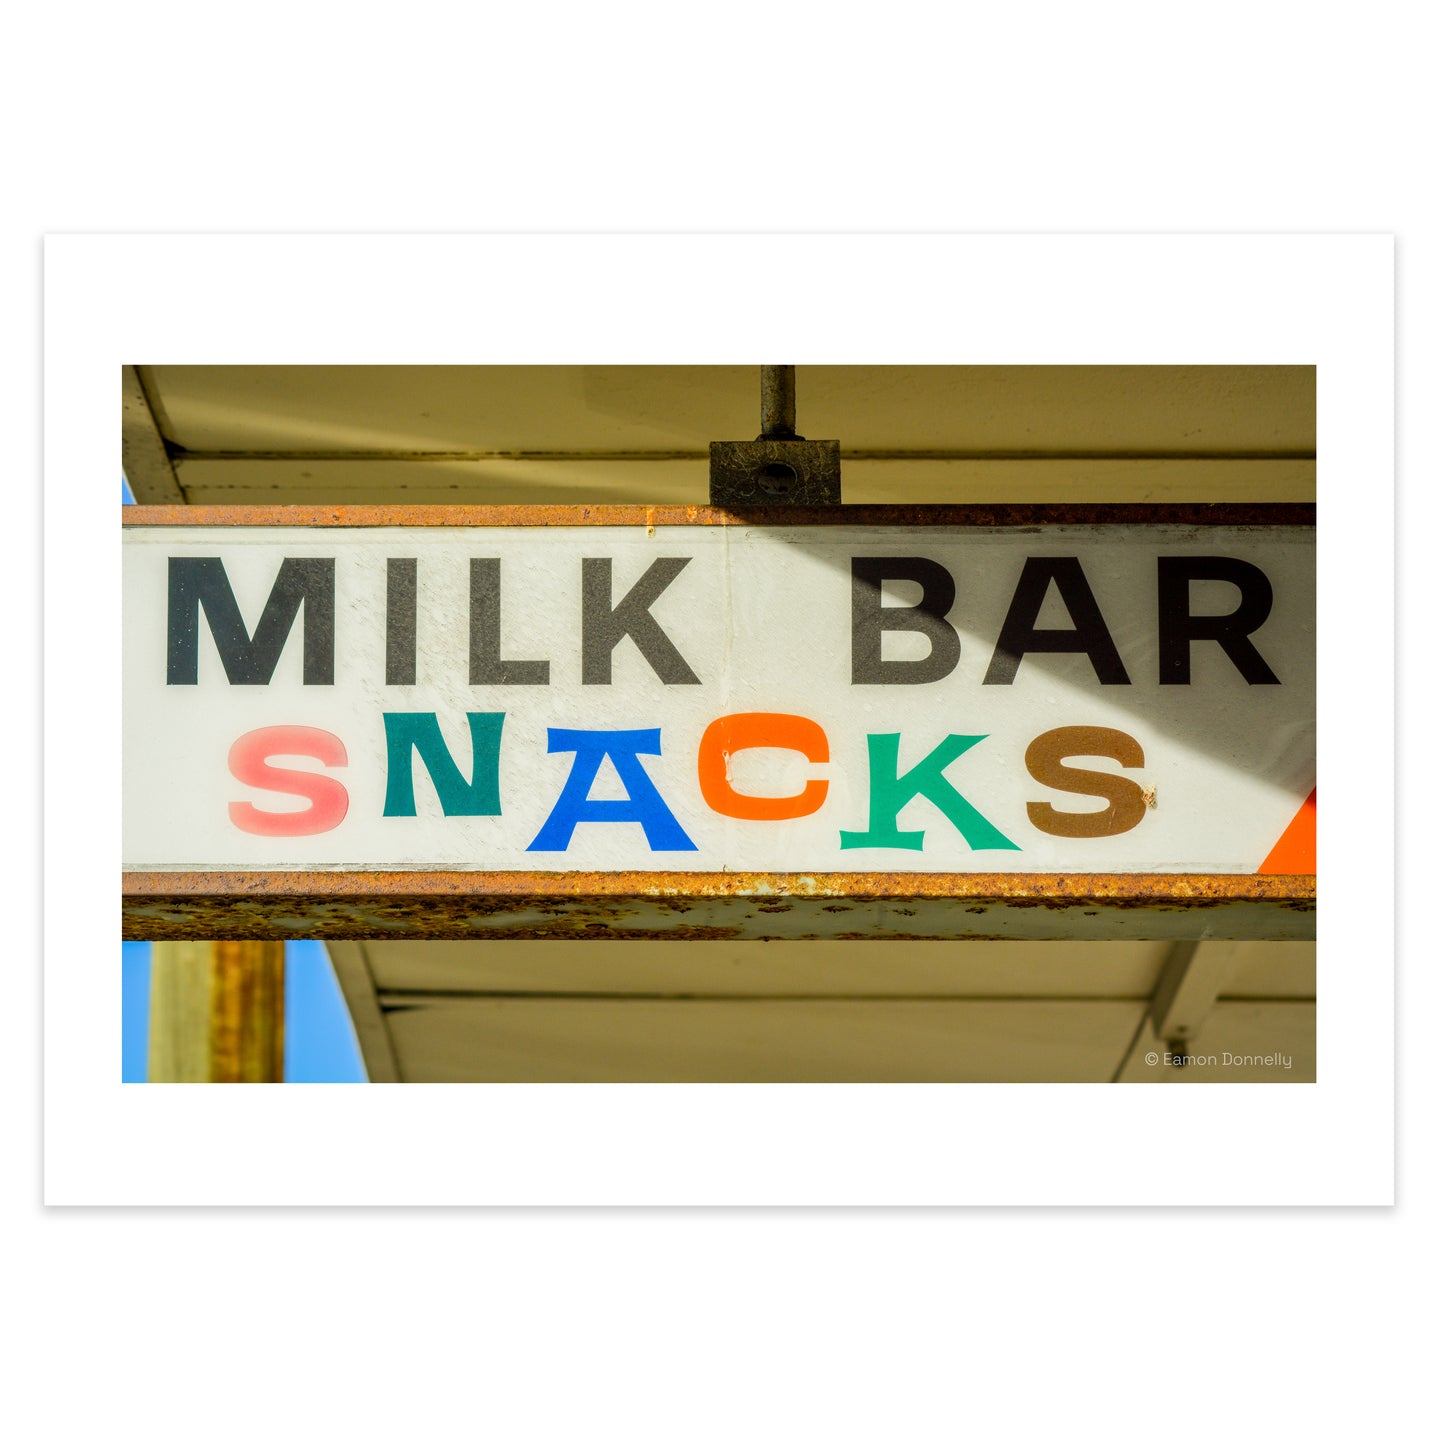 Milk Bar Snacks, Sydney, NSW